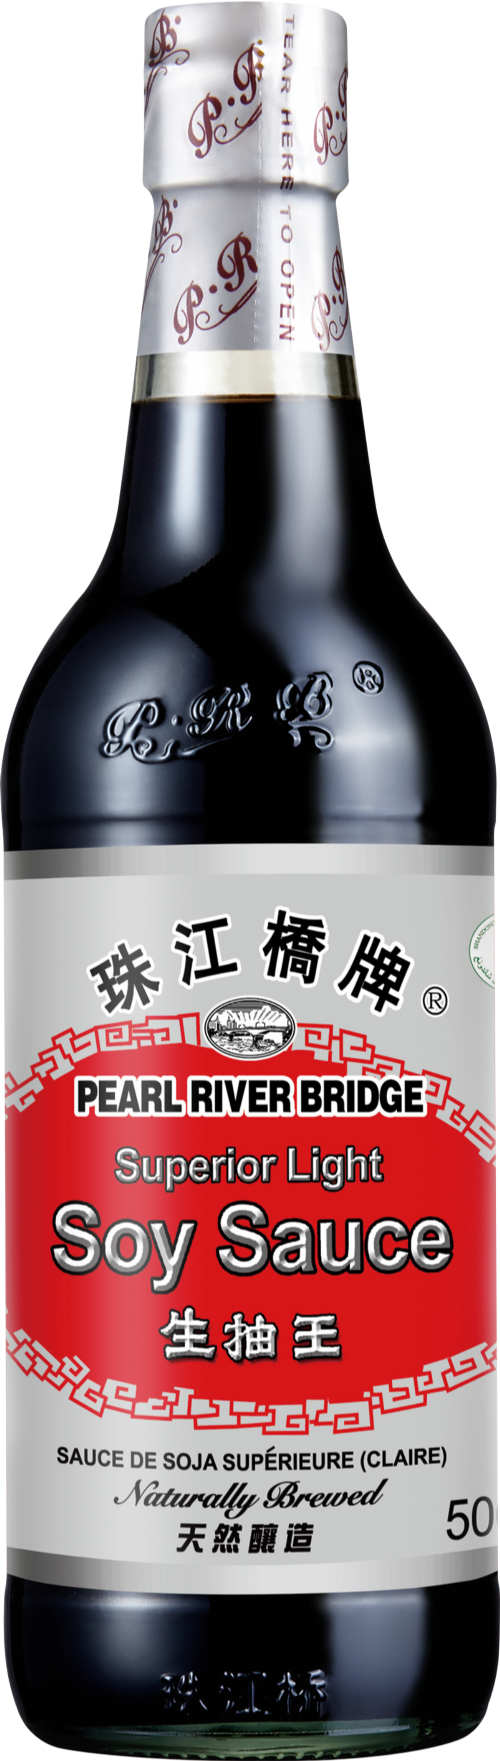 PEARL RIVER BRIDGE Light Soy Sauce 500ml